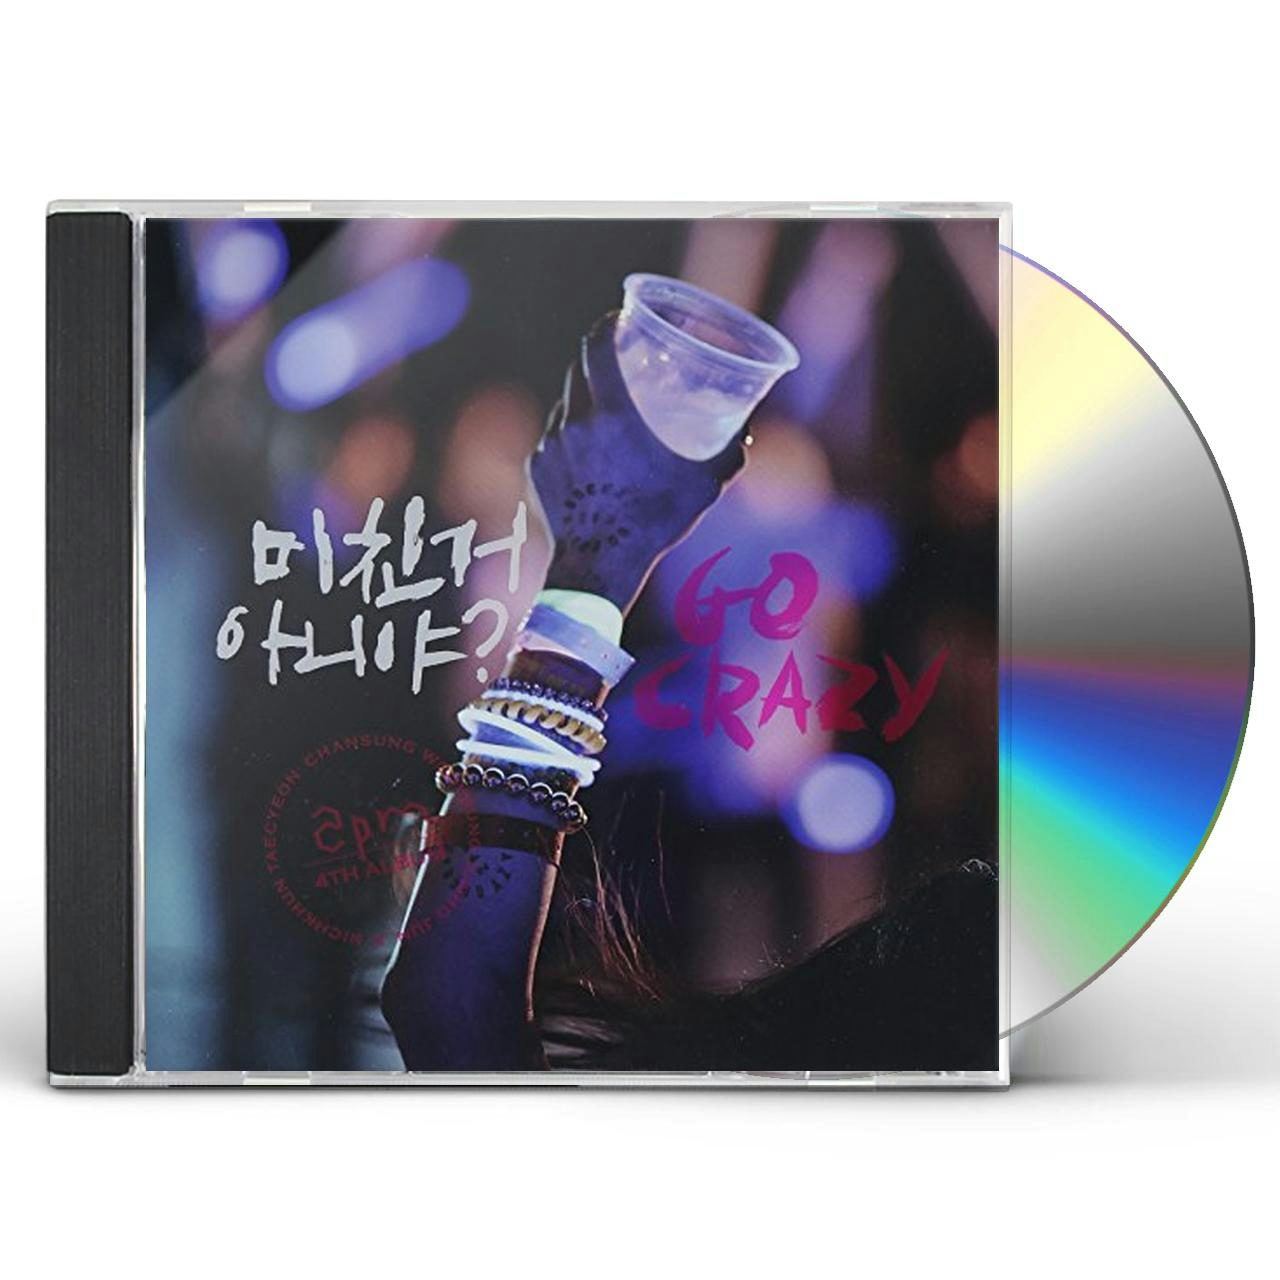 2PM GO CRAZY 4 CD